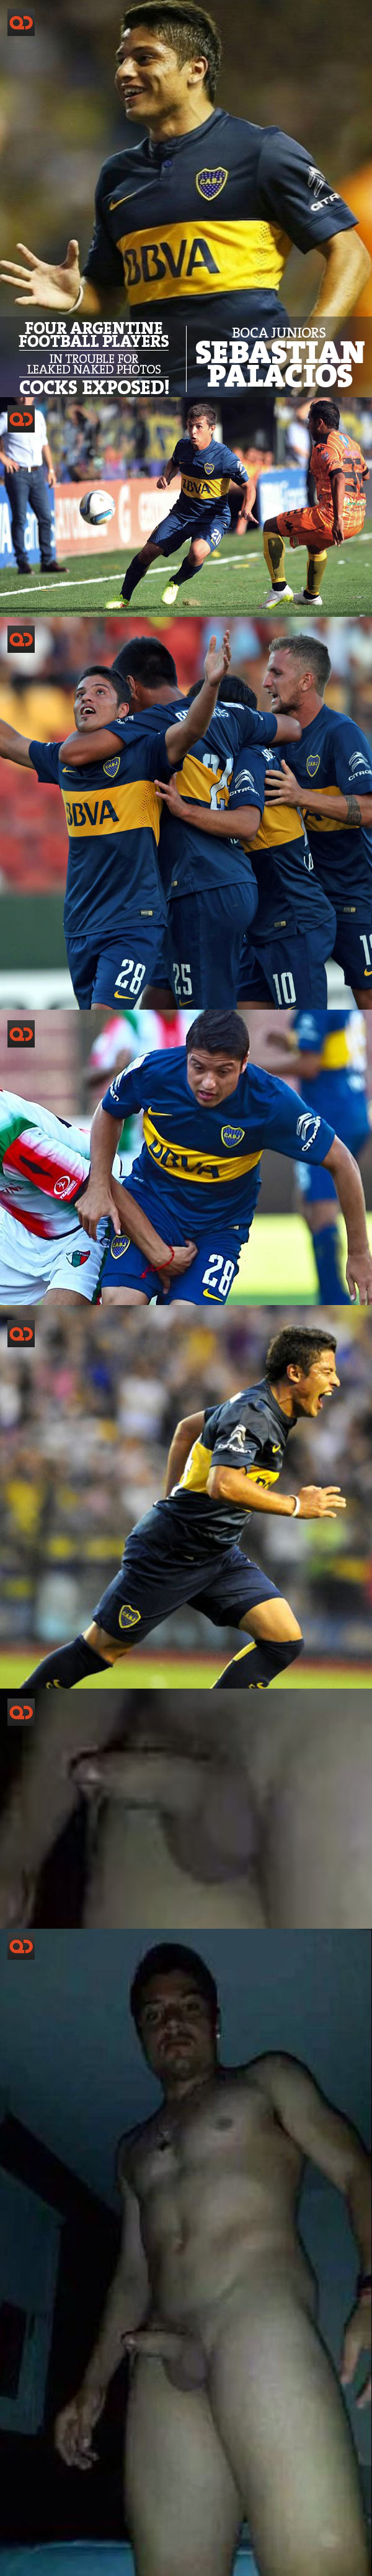 qc-exposed_celebs_argentine_football_players_daniel_osvaldo-sebastian_palacios_ricardo_noir_fabian_noguera_cocks_exposed-collage03